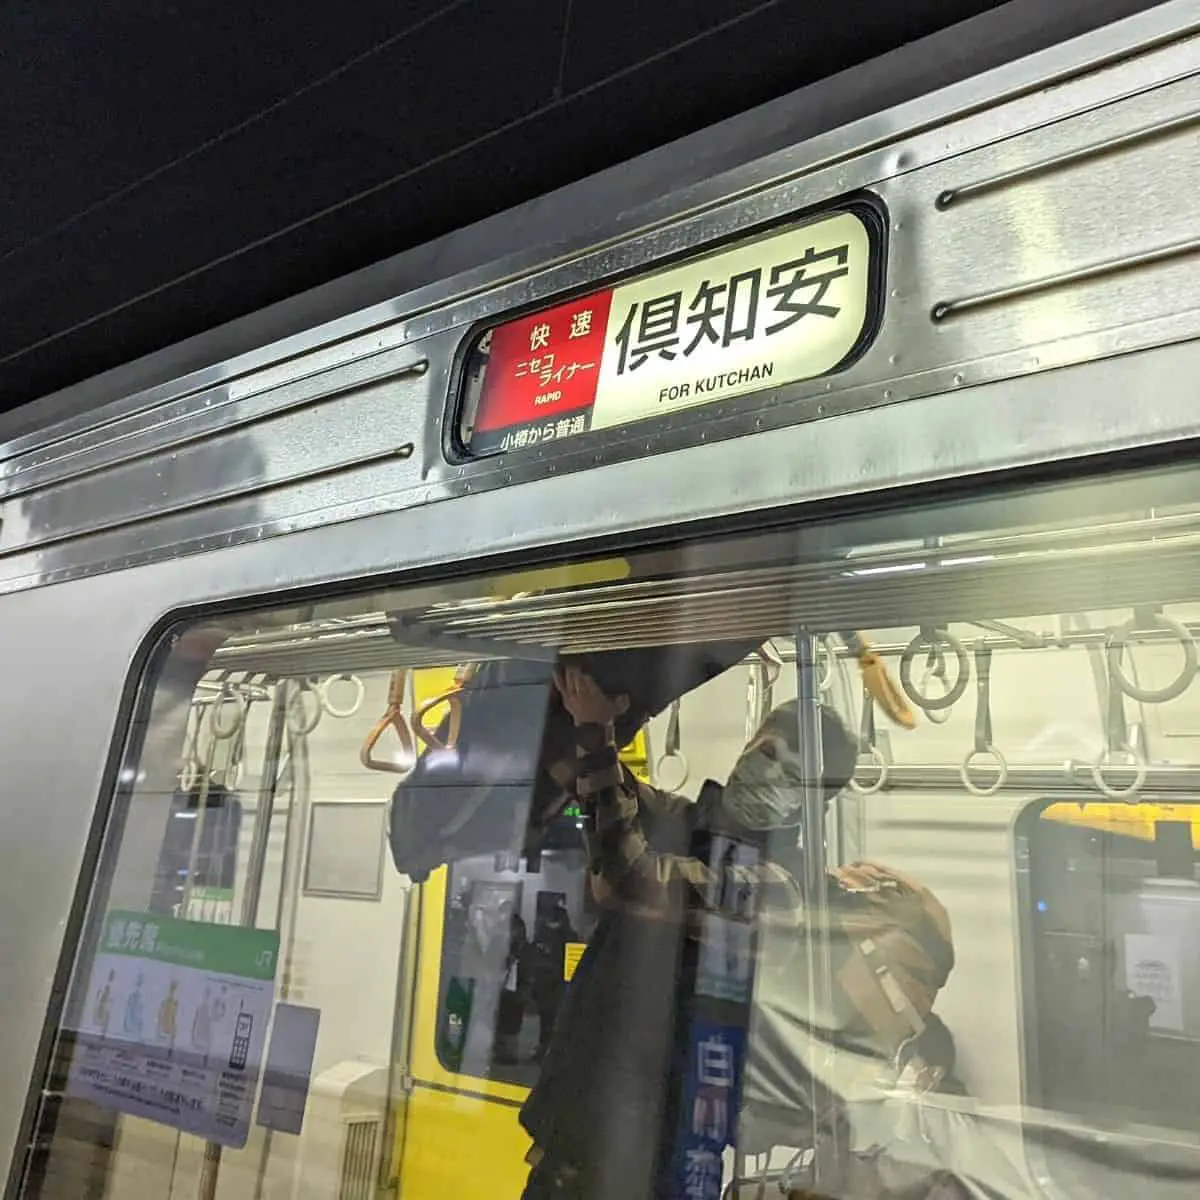 Otaru to Kutchan on the Niseko liner train